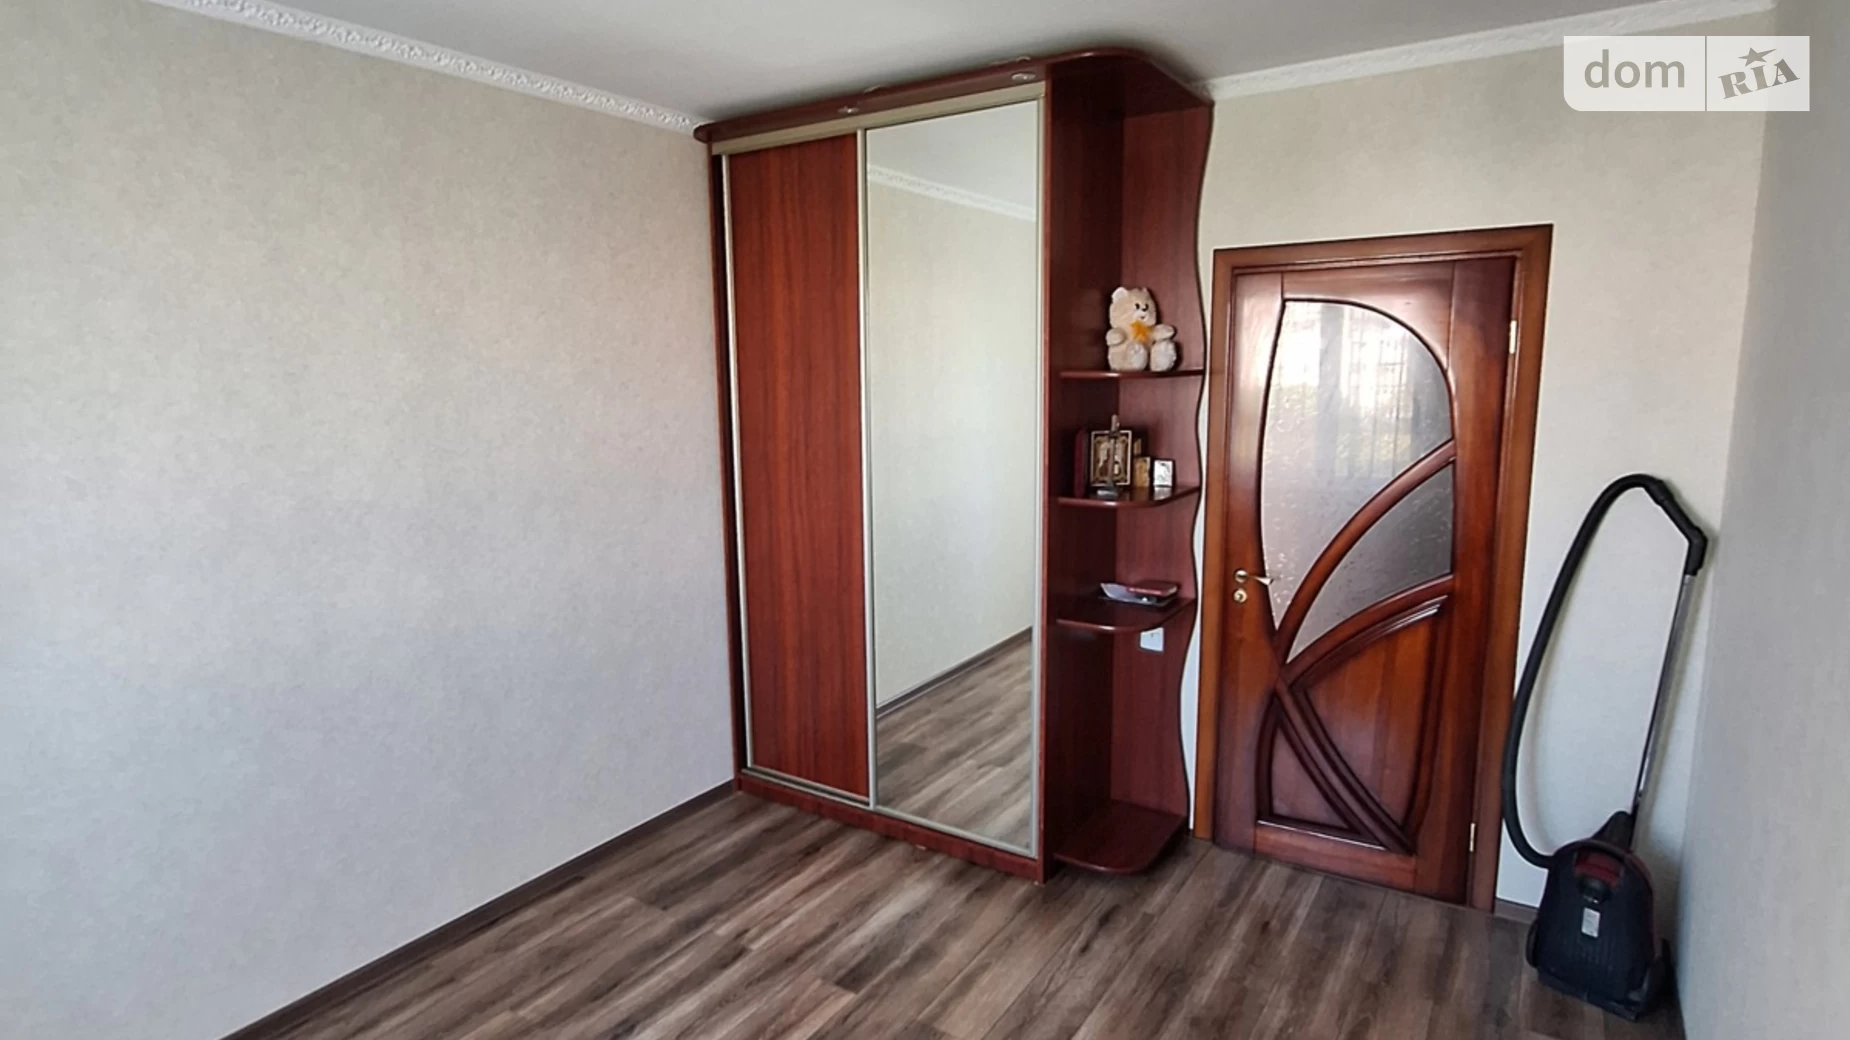 Продається 3-кімнатна квартира 70 кв. м у Хмельницькому, вул. Панаса Мирного